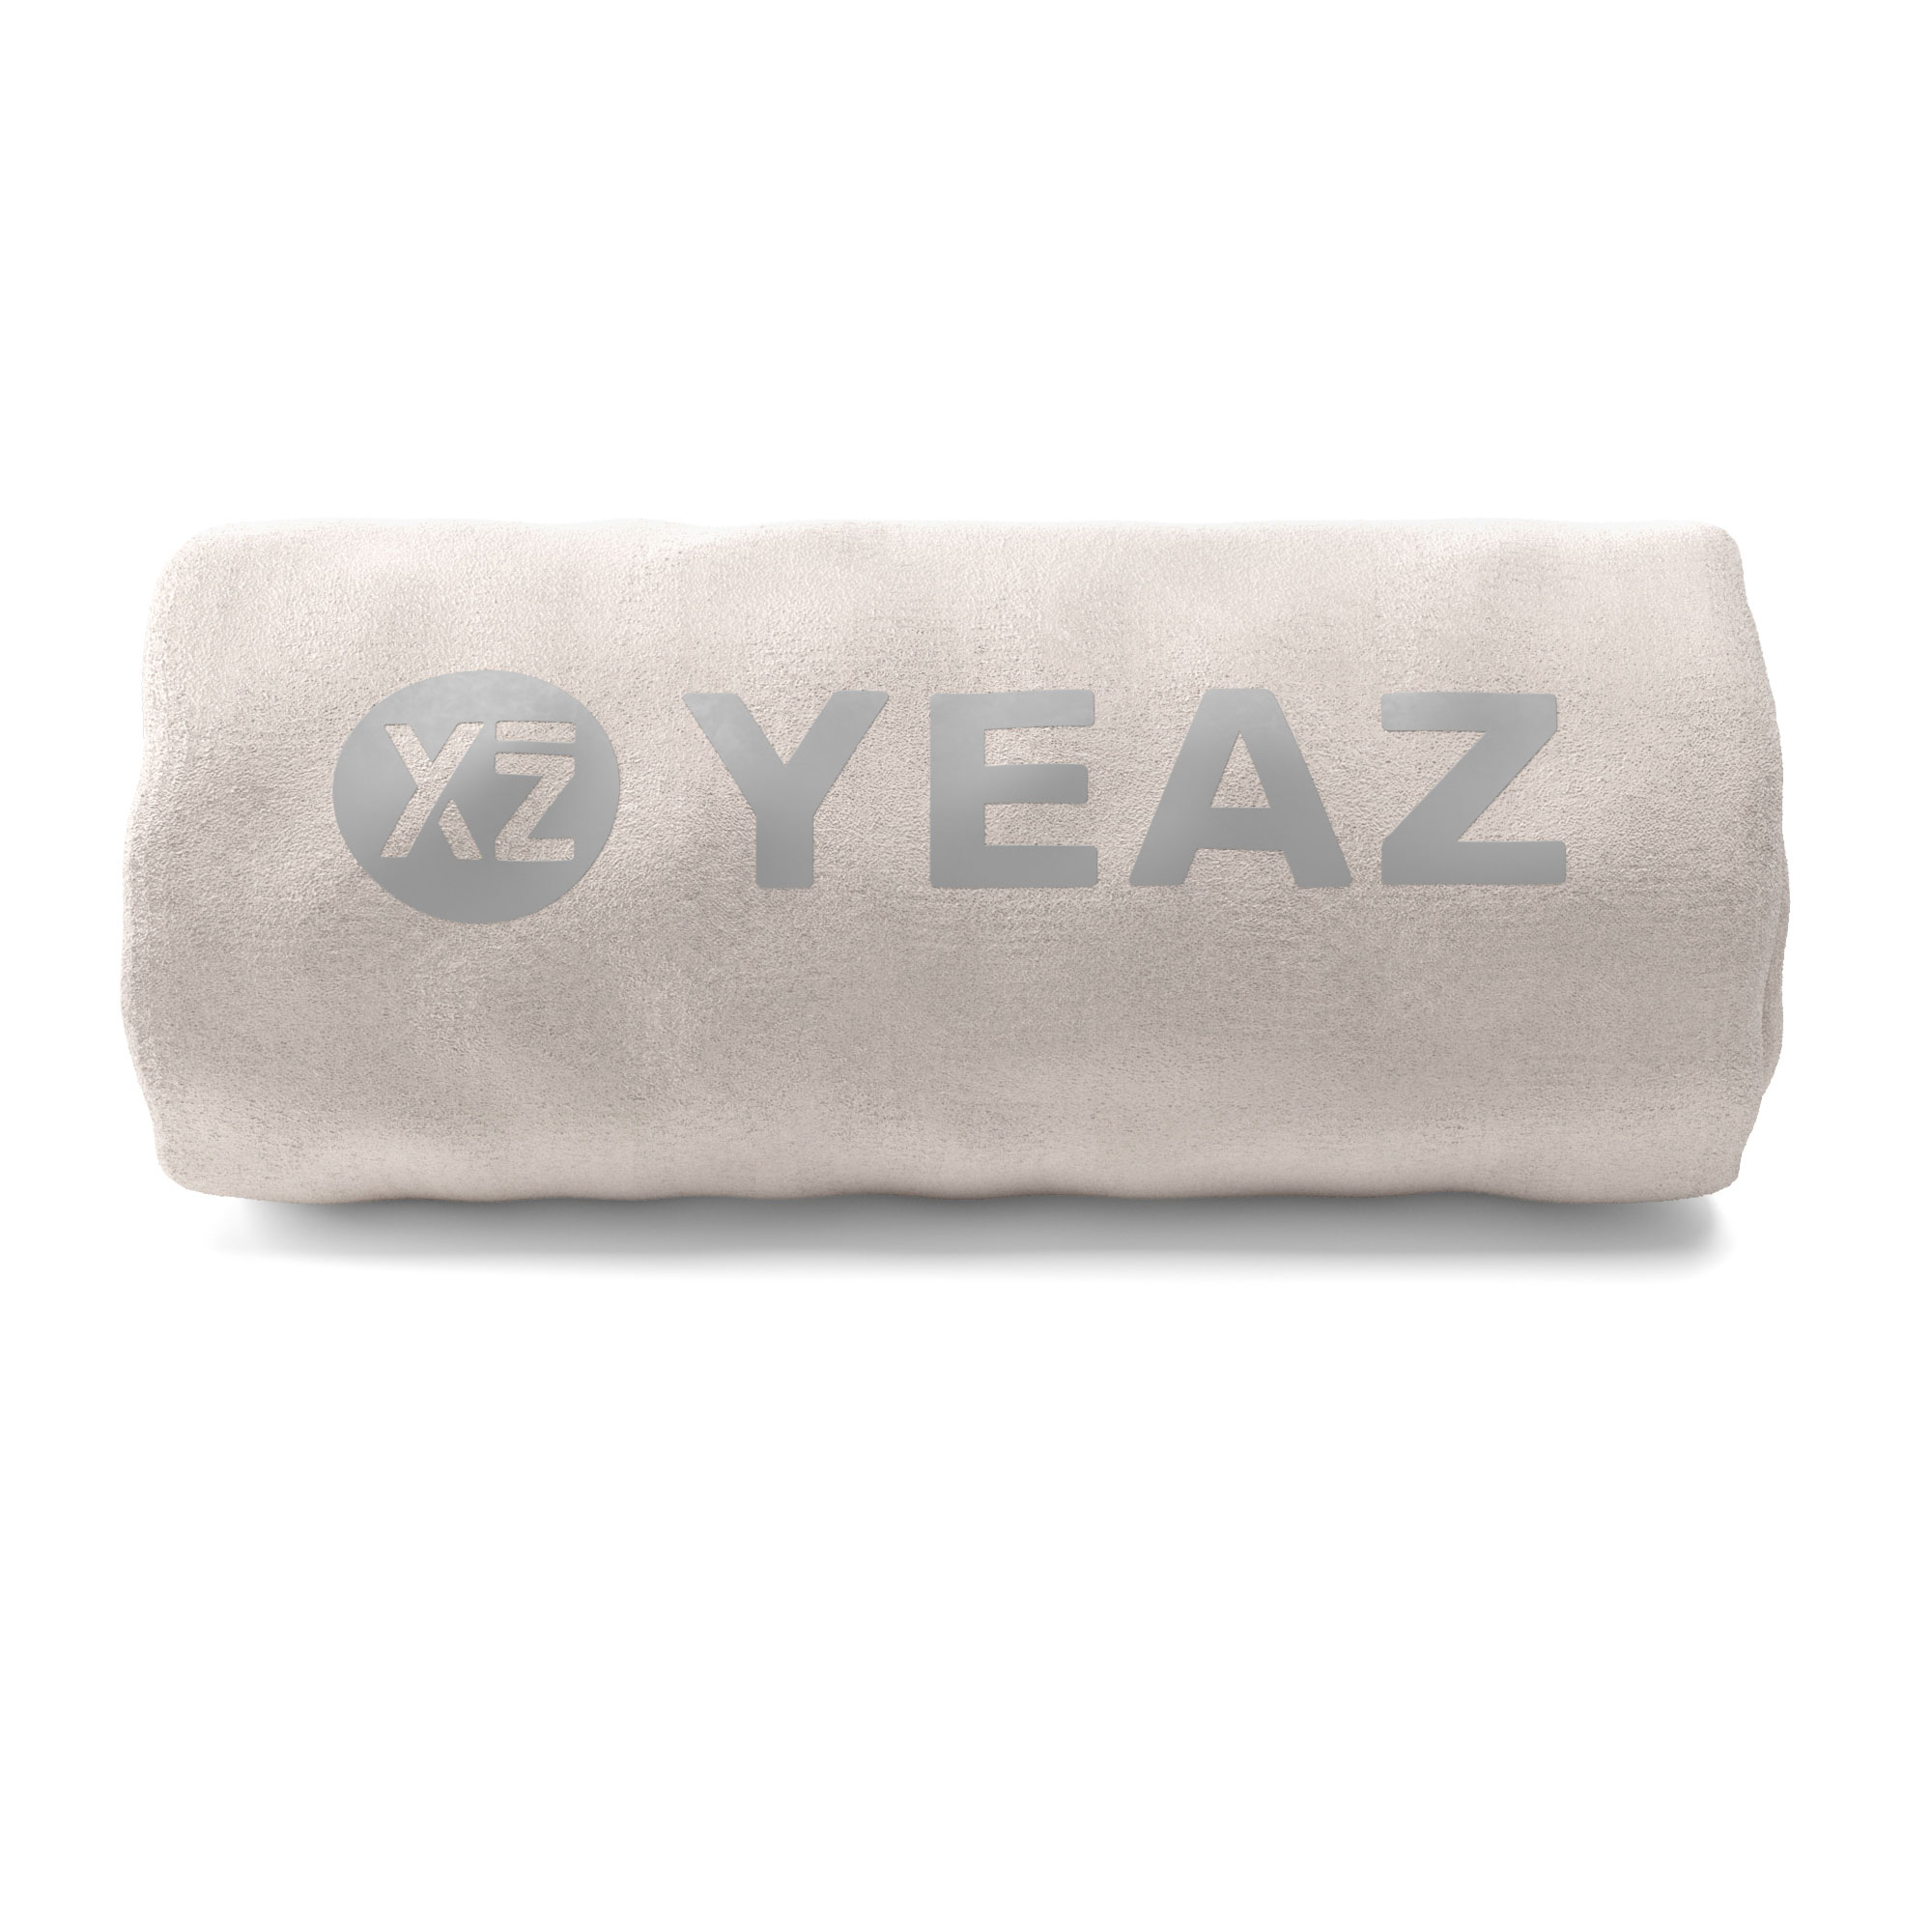 NEXT YEAZ & Yoga-Blöcke Handtuch, LEVEL Set dust pearl